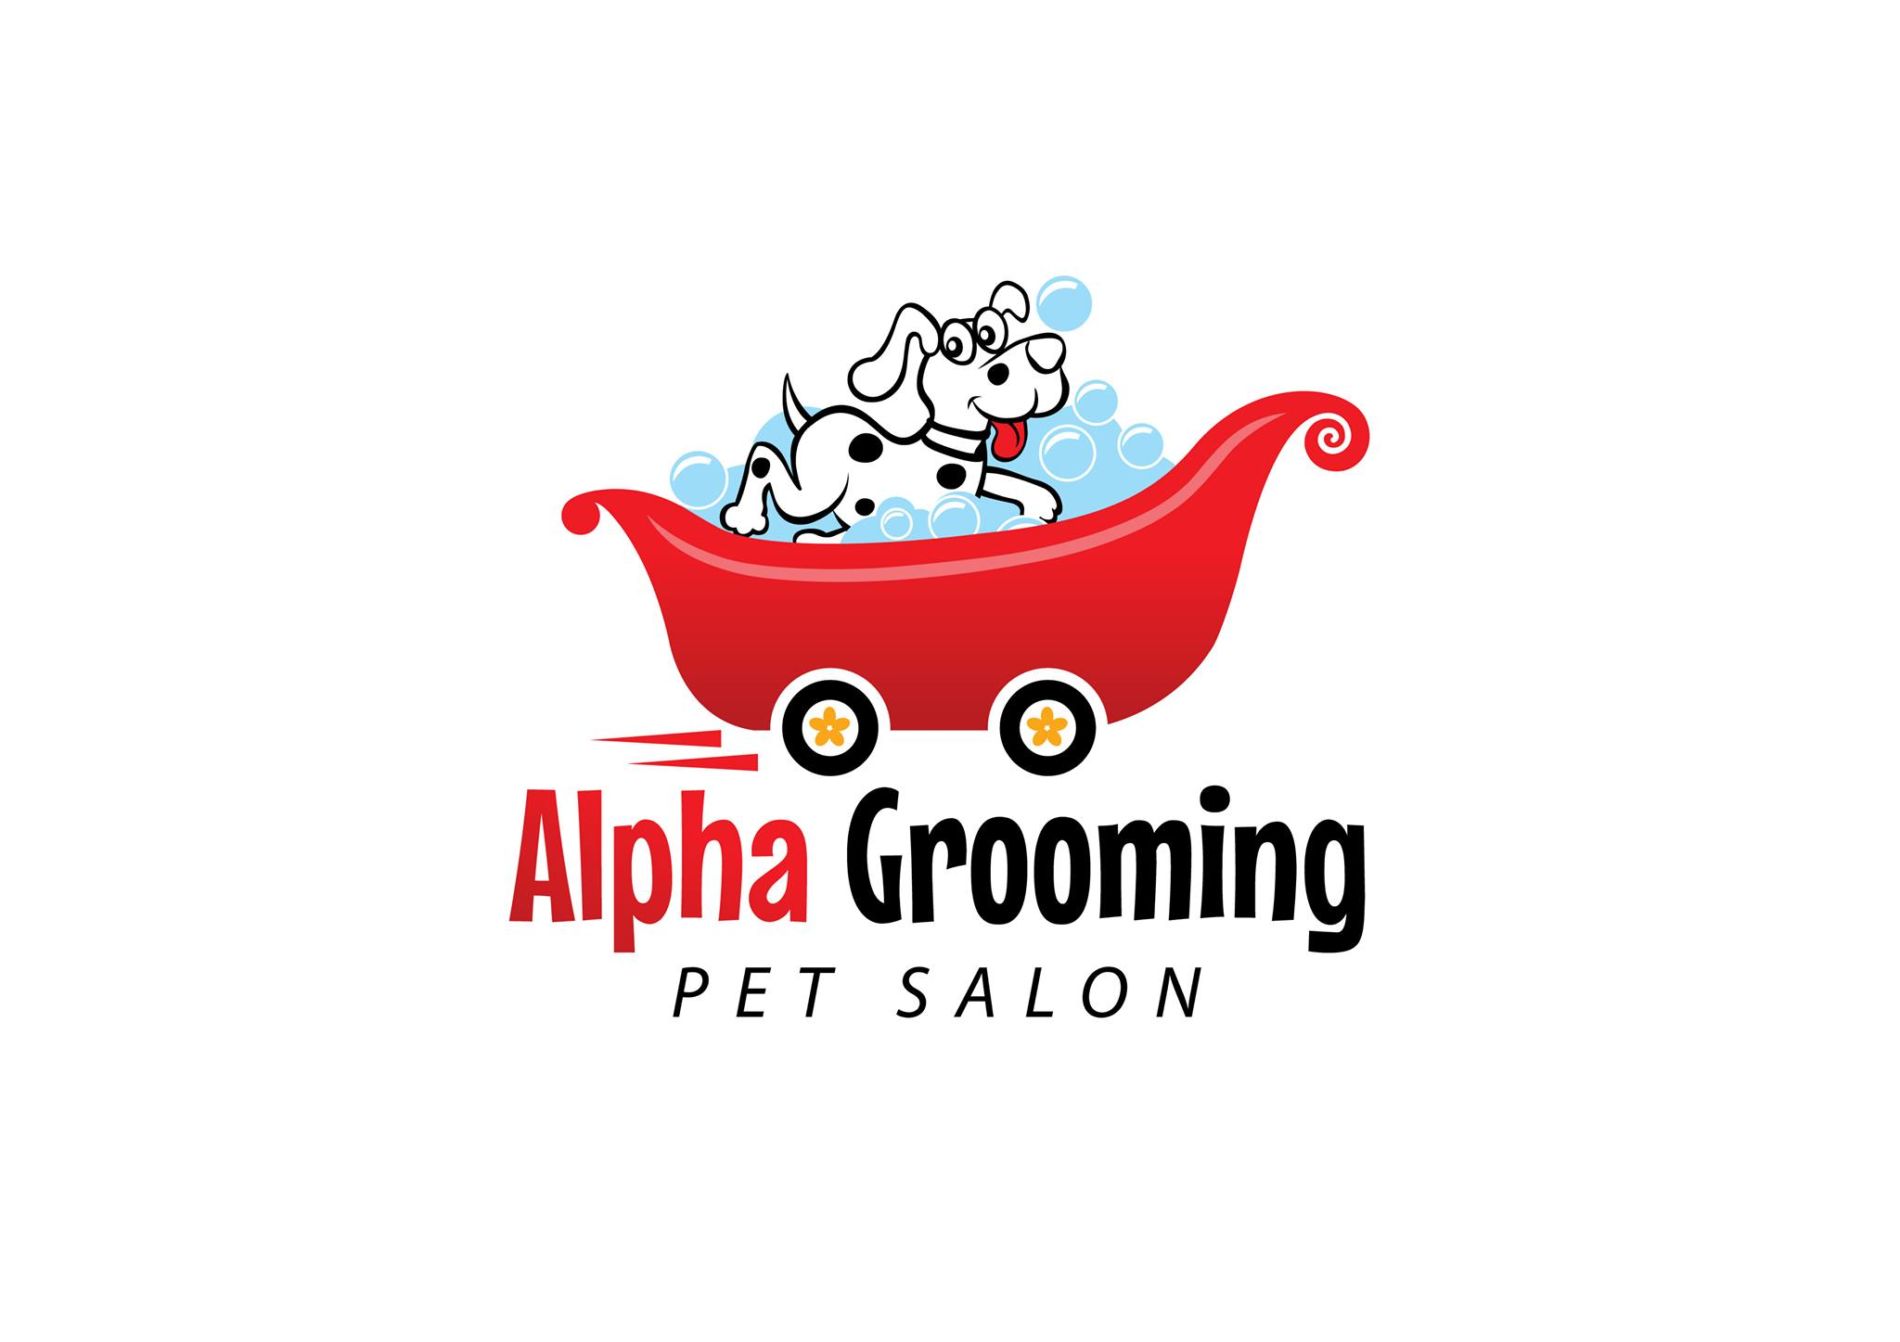 alpha dog mobile grooming